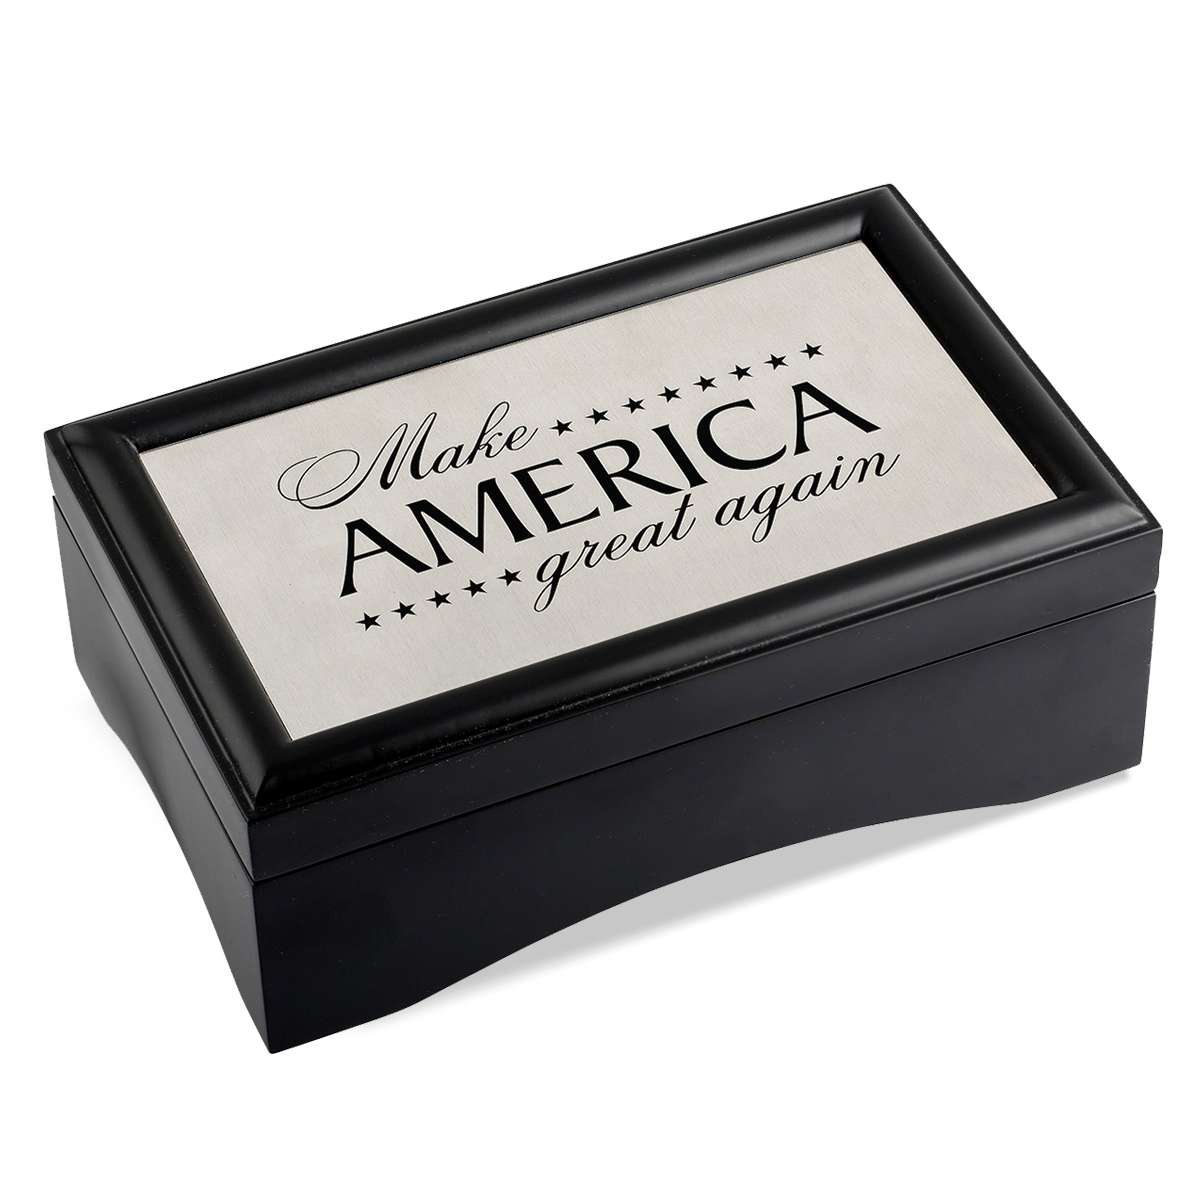 America's Jewelry Box